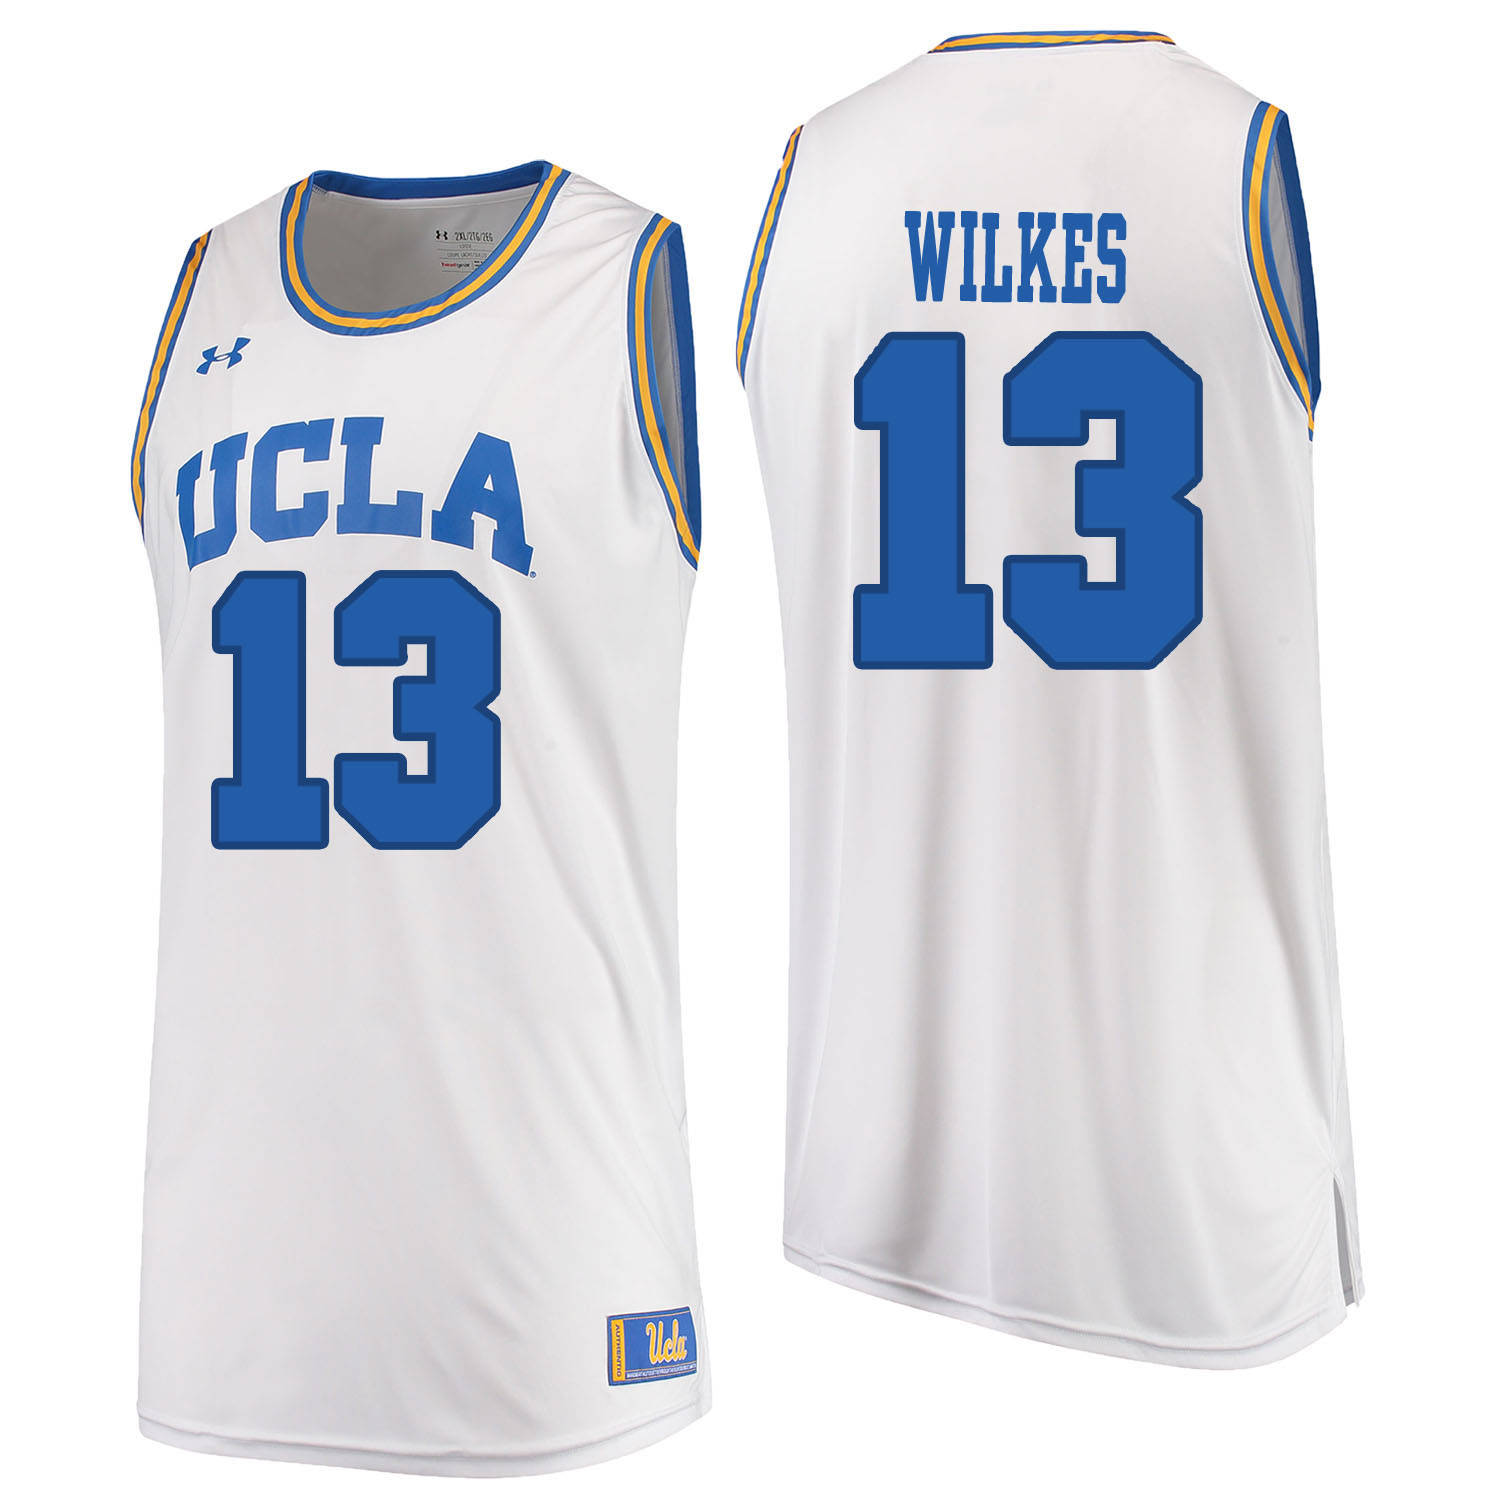 UCLA Bruins 13 Kris Wilkes White College Basketball Jersey